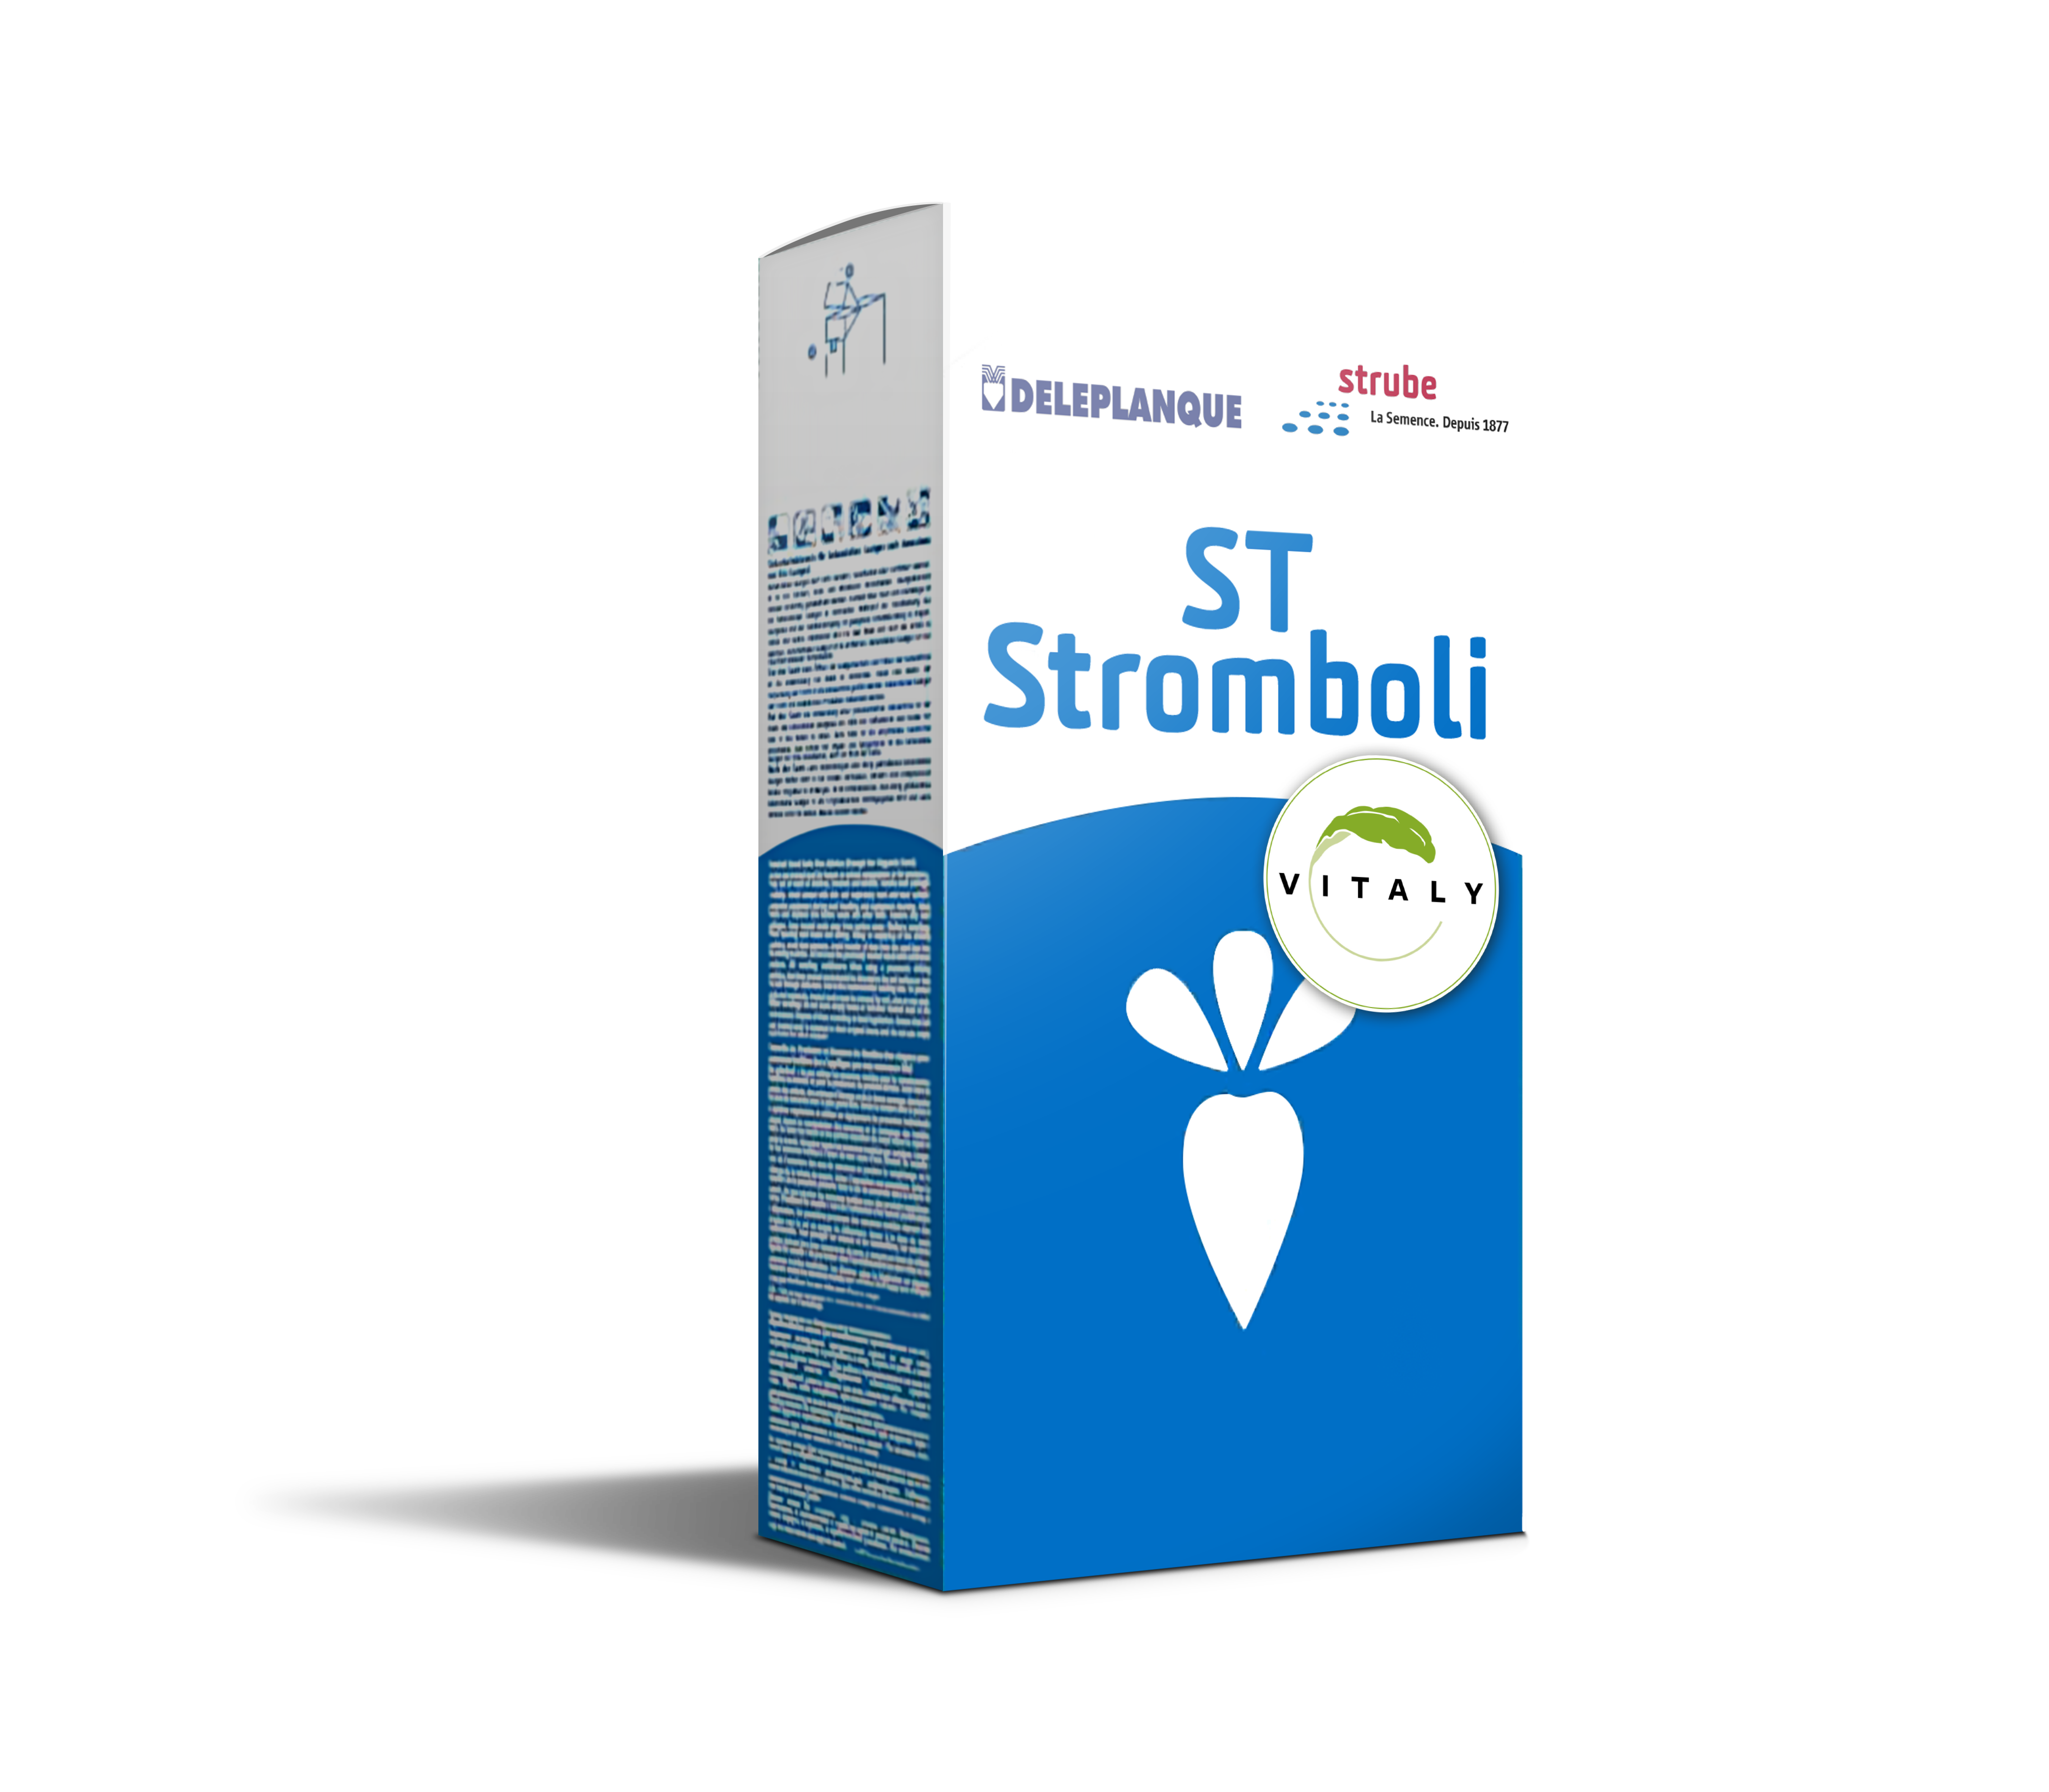 Visuel variété ST Stromboli